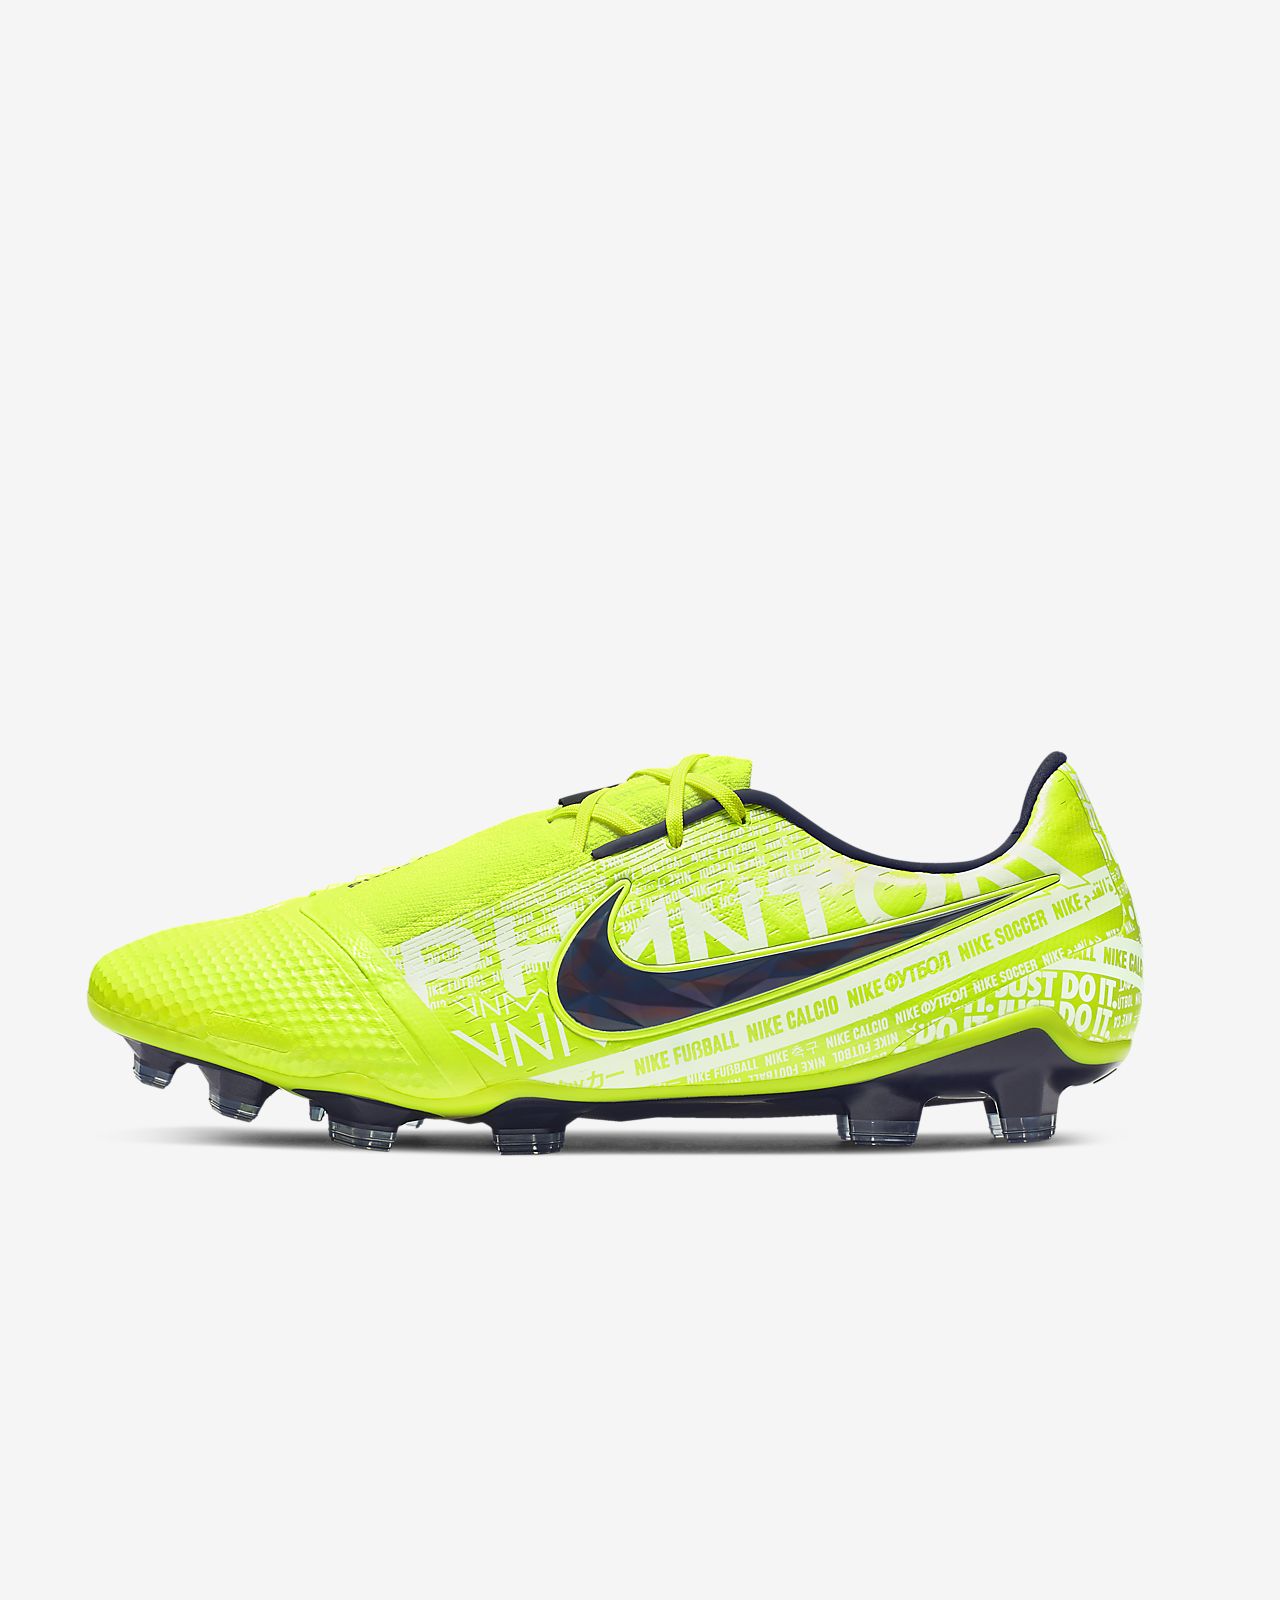 Nike Hypervenom Phantom 3 III SG Pro Soccer Cleats eBay